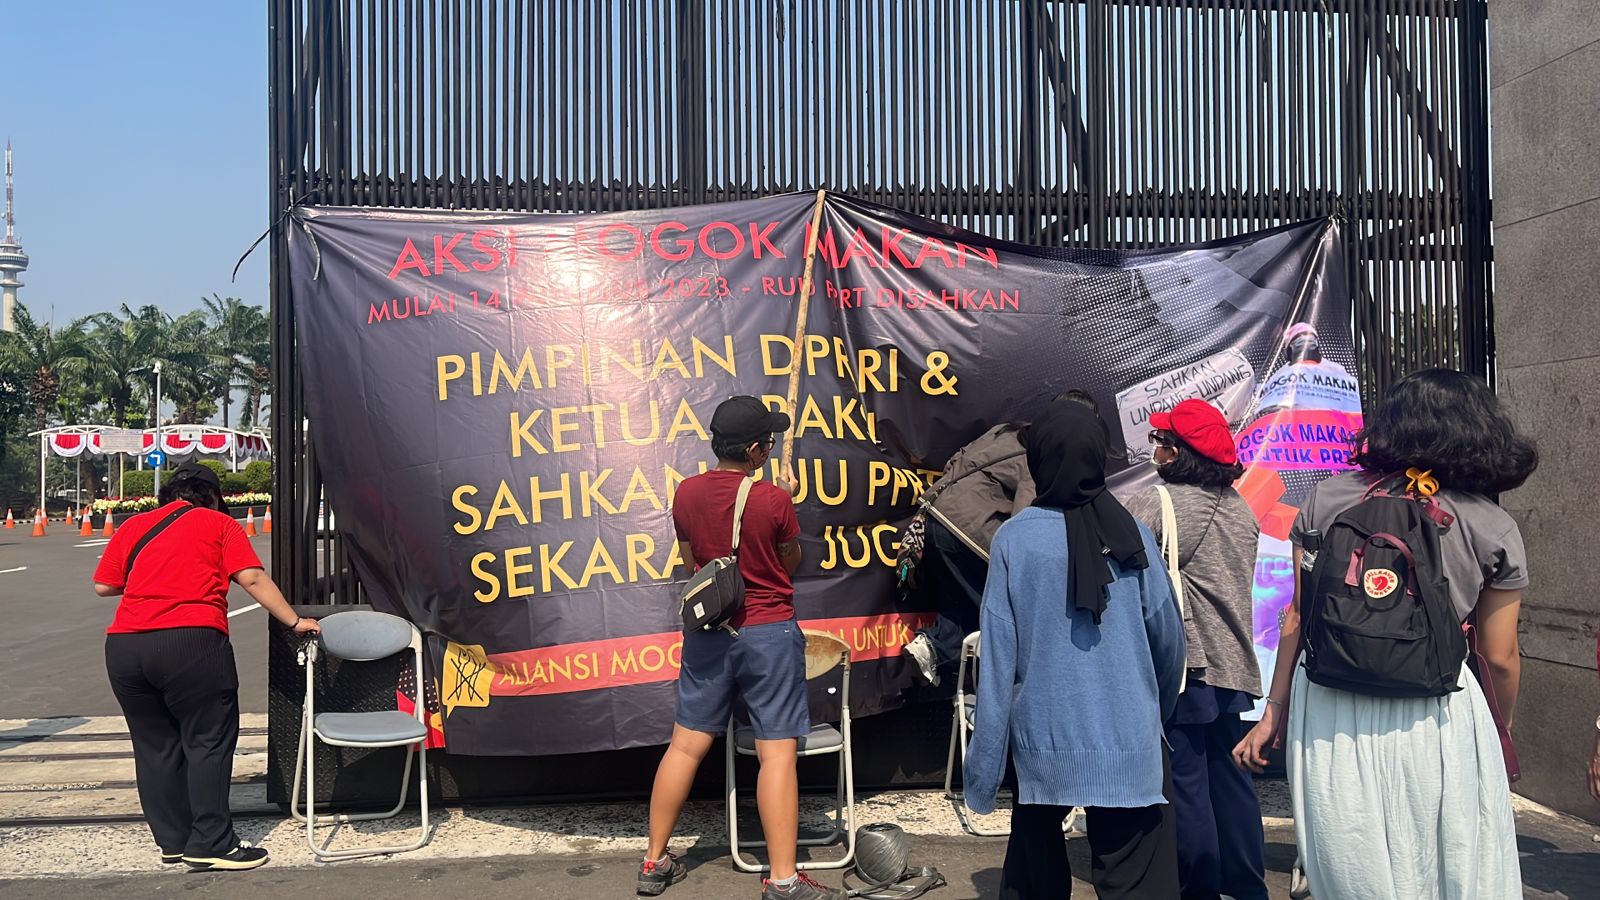 Peserta aksi mogok makan mendorong agar RUU PPRT disahkan di depan gedung DPR RI Senayan. (SinPo.id/JALA PRT)